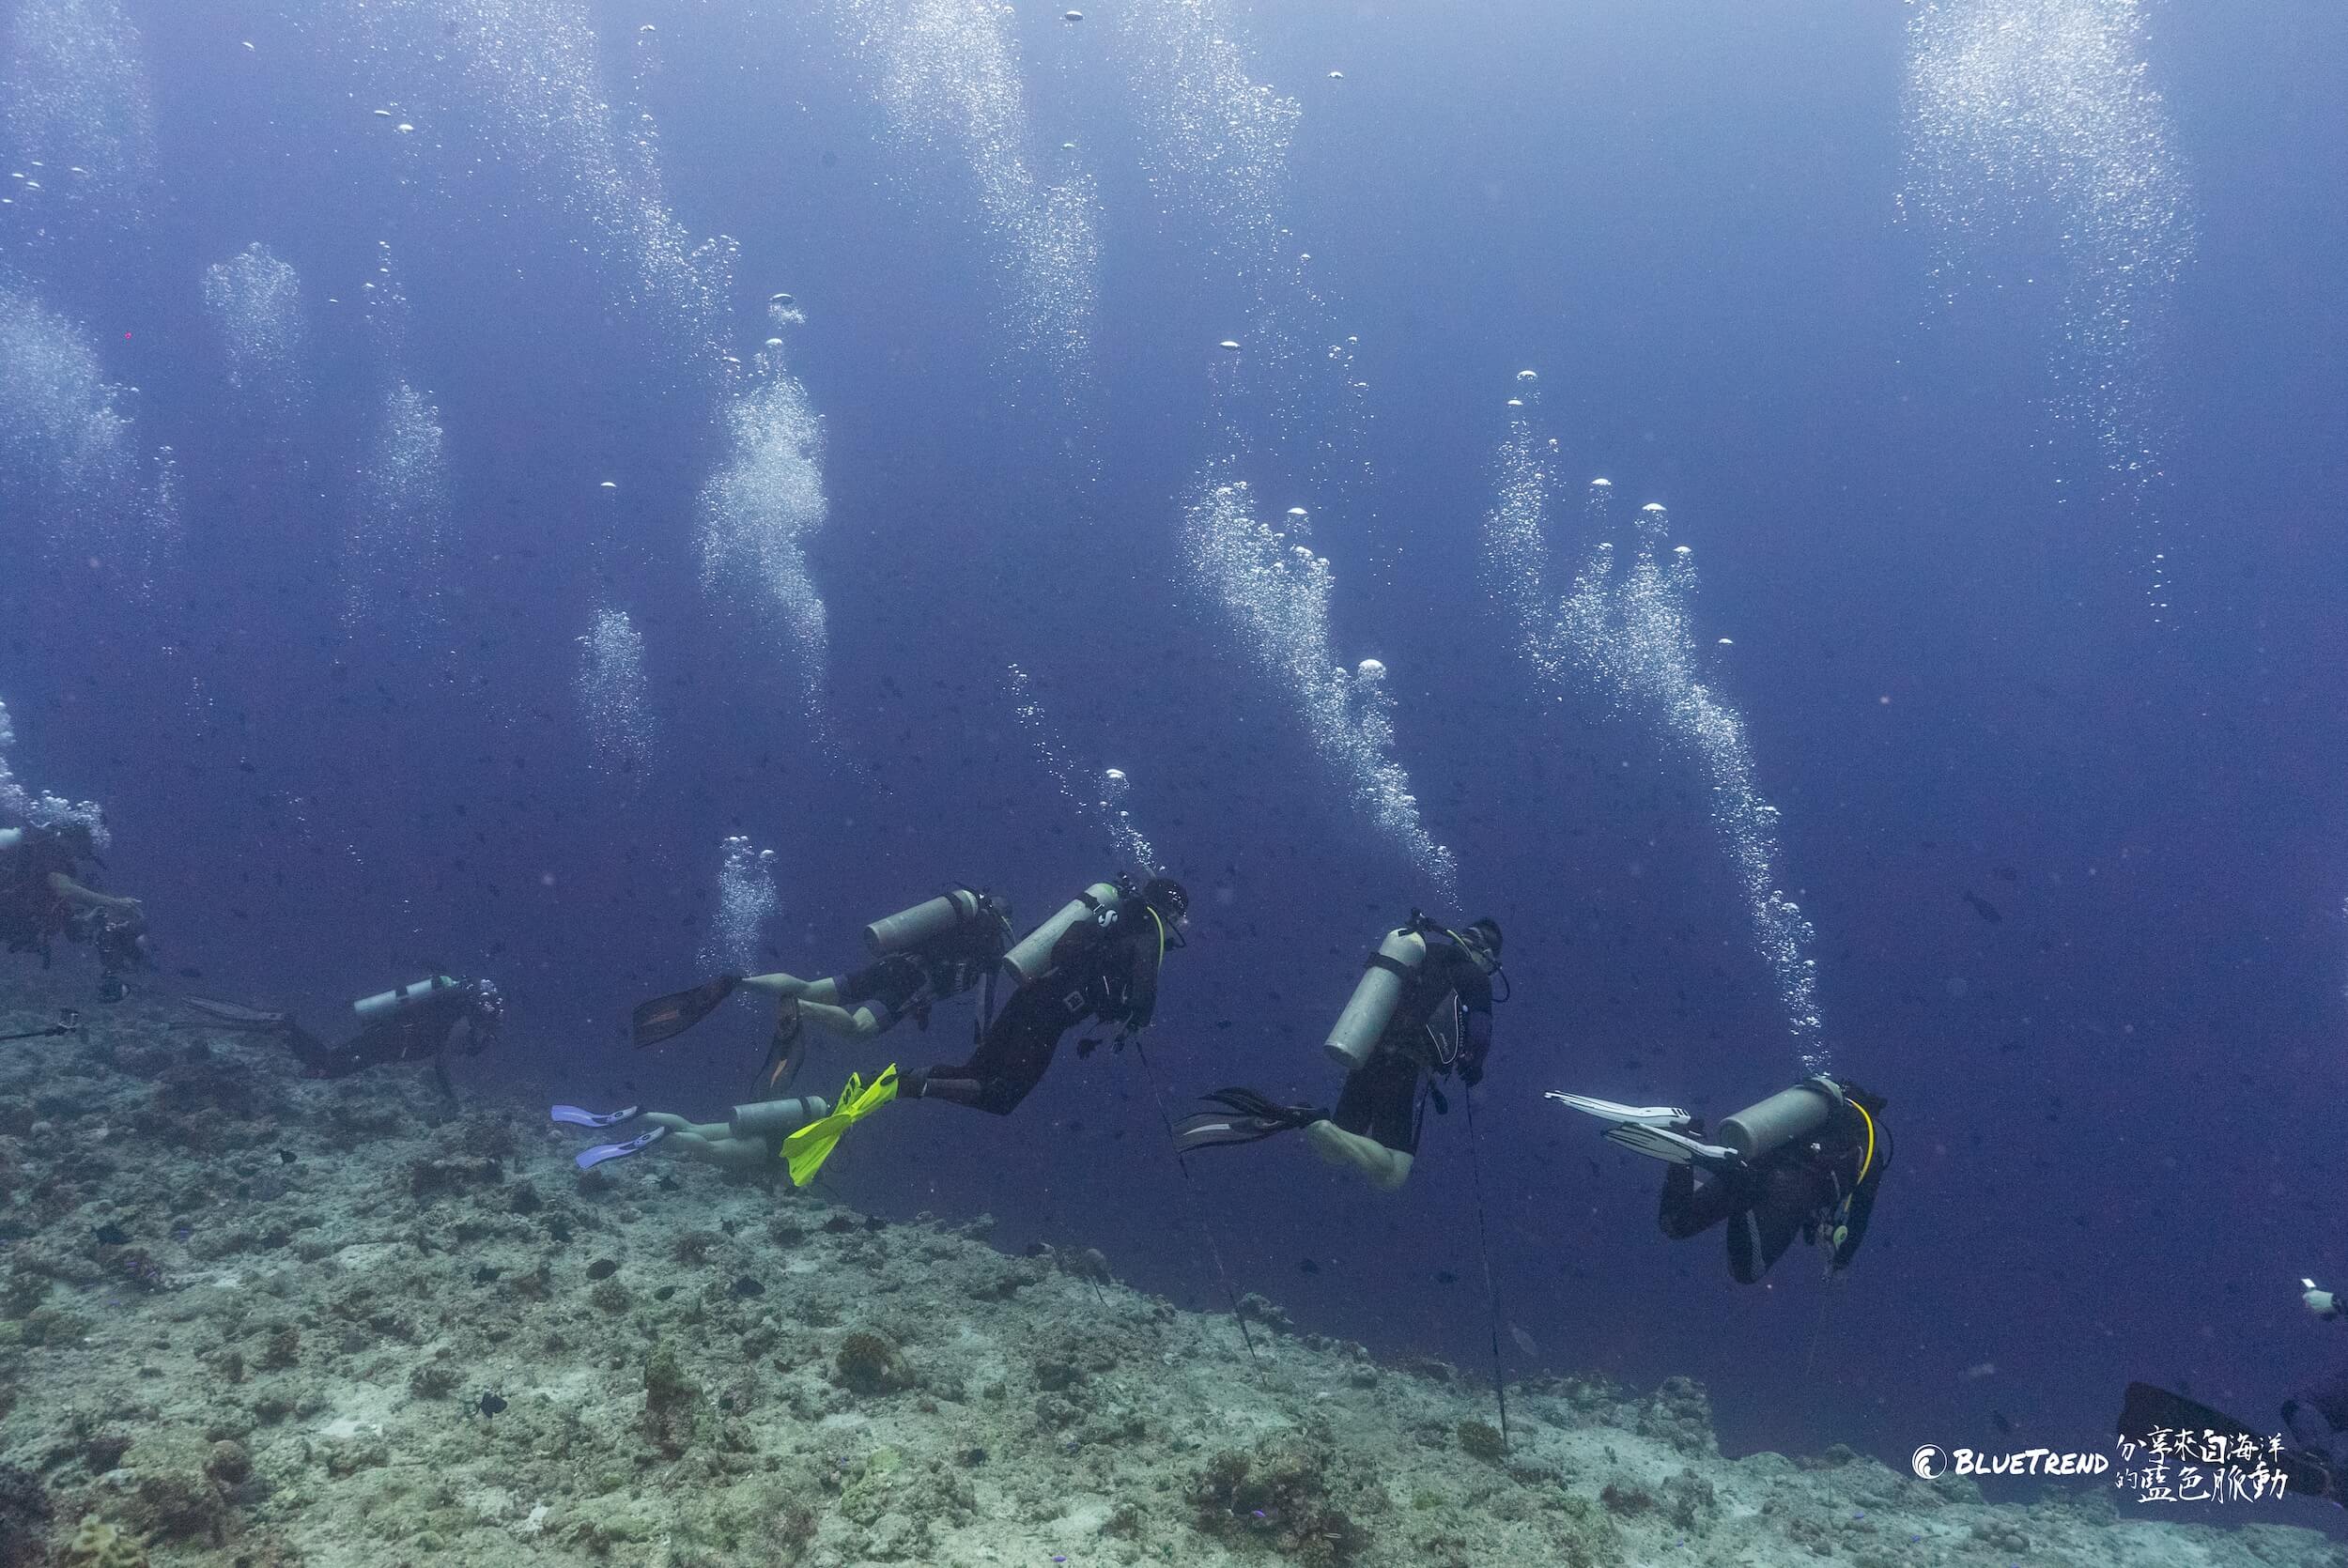 DSC08778 初探帛琉潛水 3 大潛點 : 藍洞、藍角、德國水道，替 Spawn Diving 暖身做準備